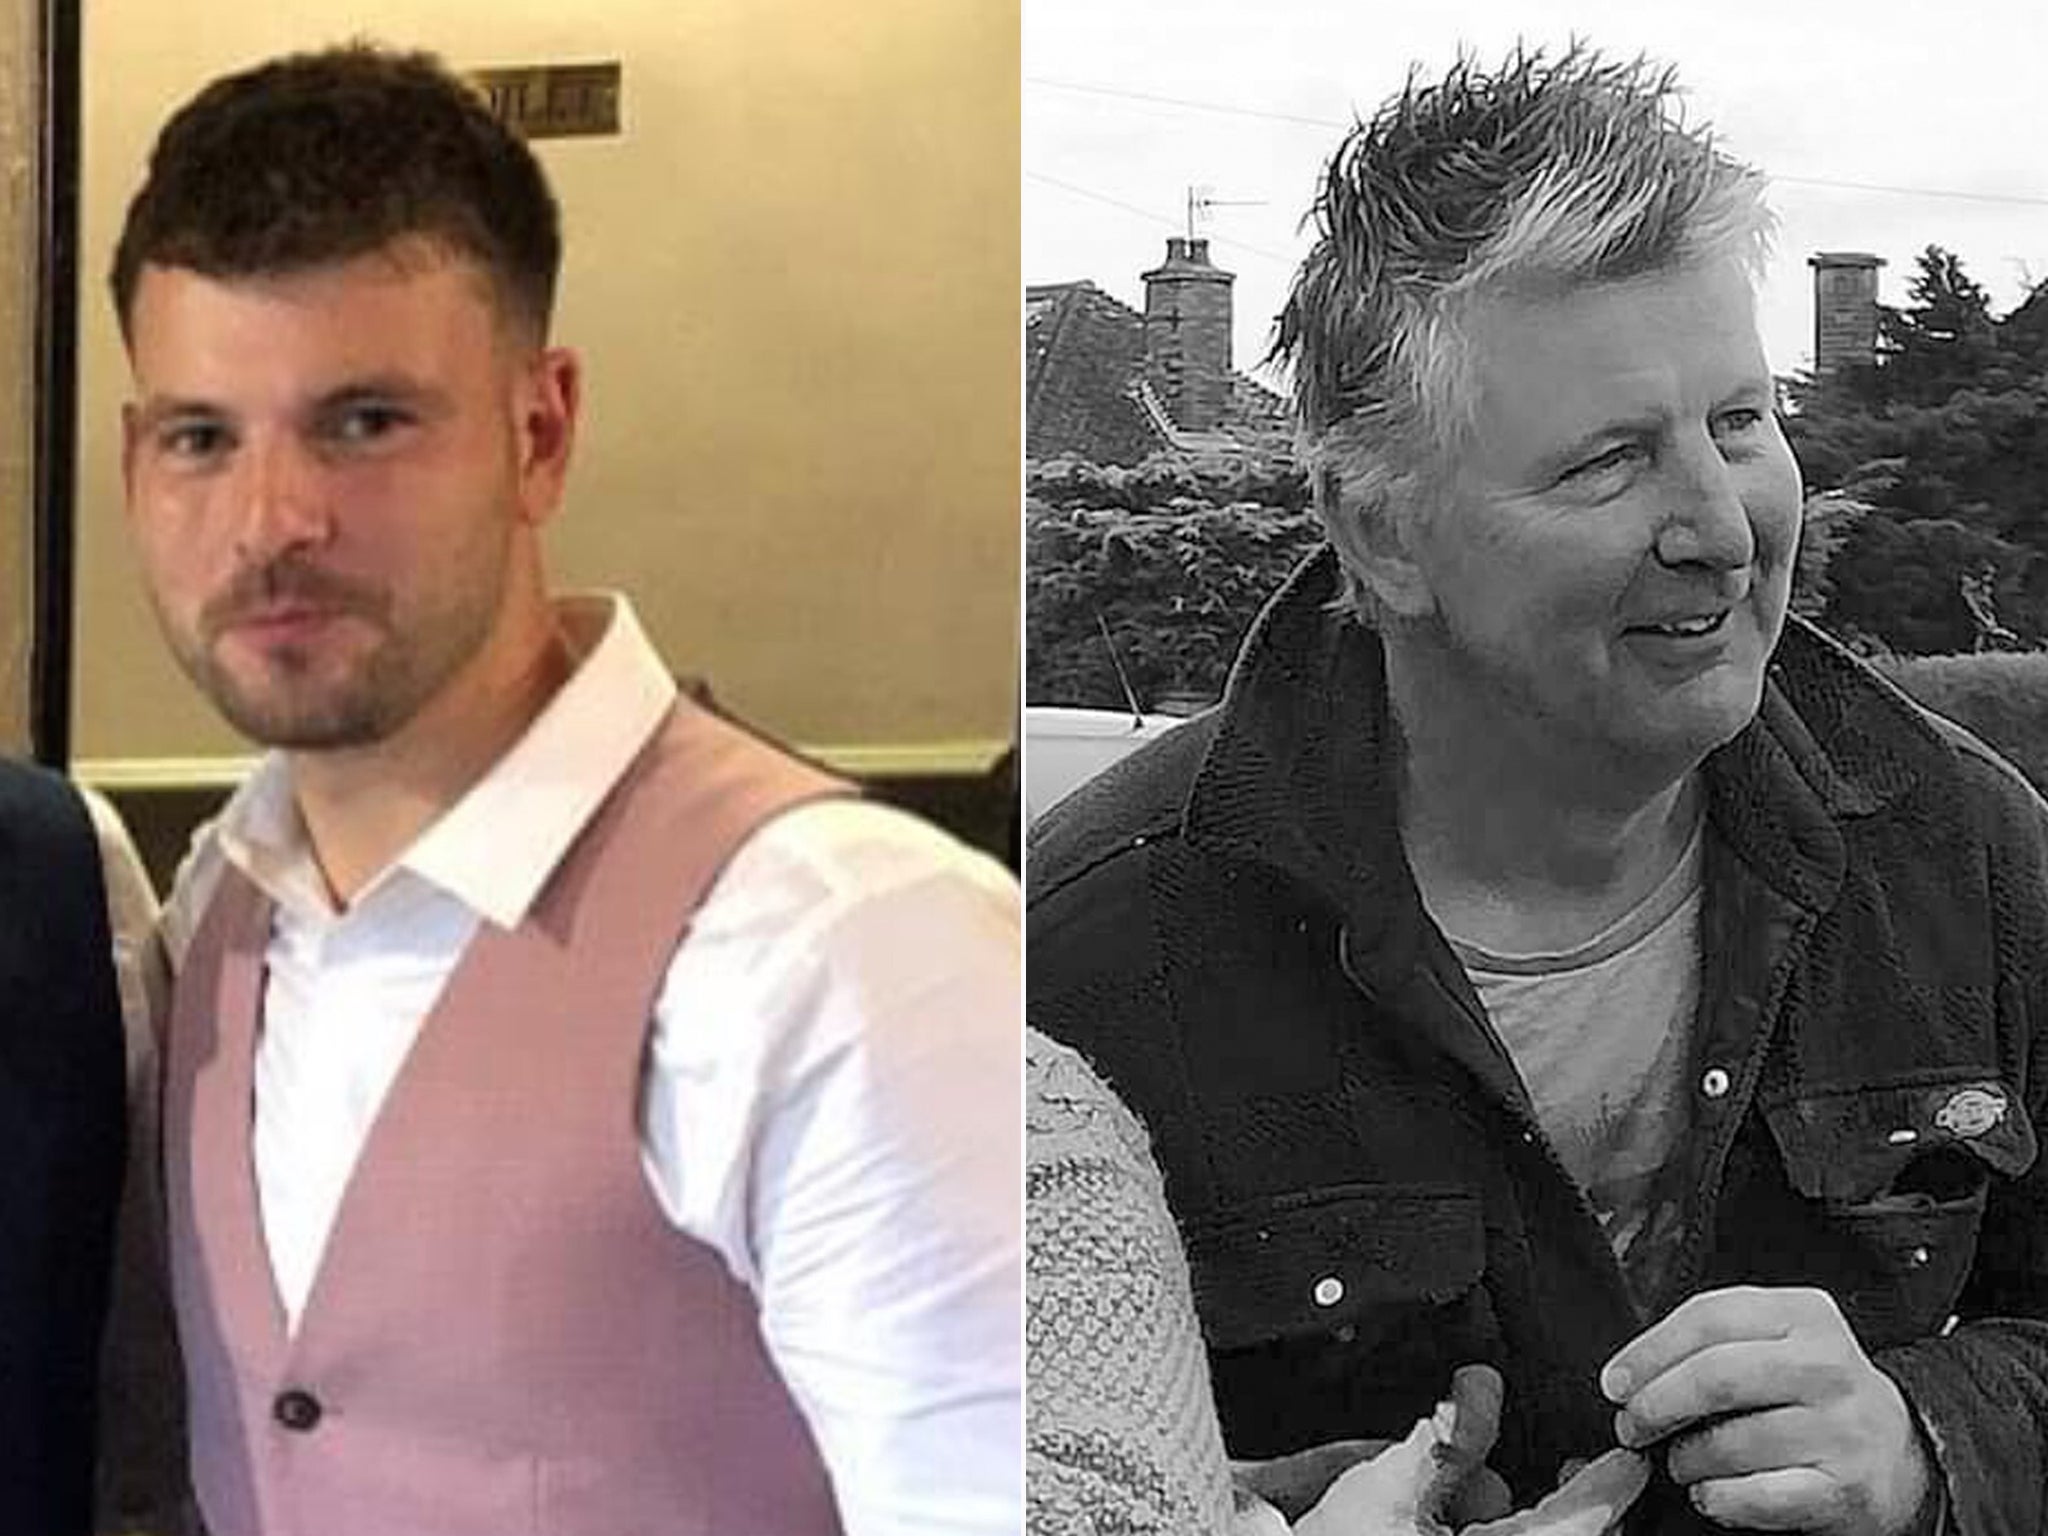 Stephen Alderton has pleaded guilty to murdering Gary and Joshua Dunmore